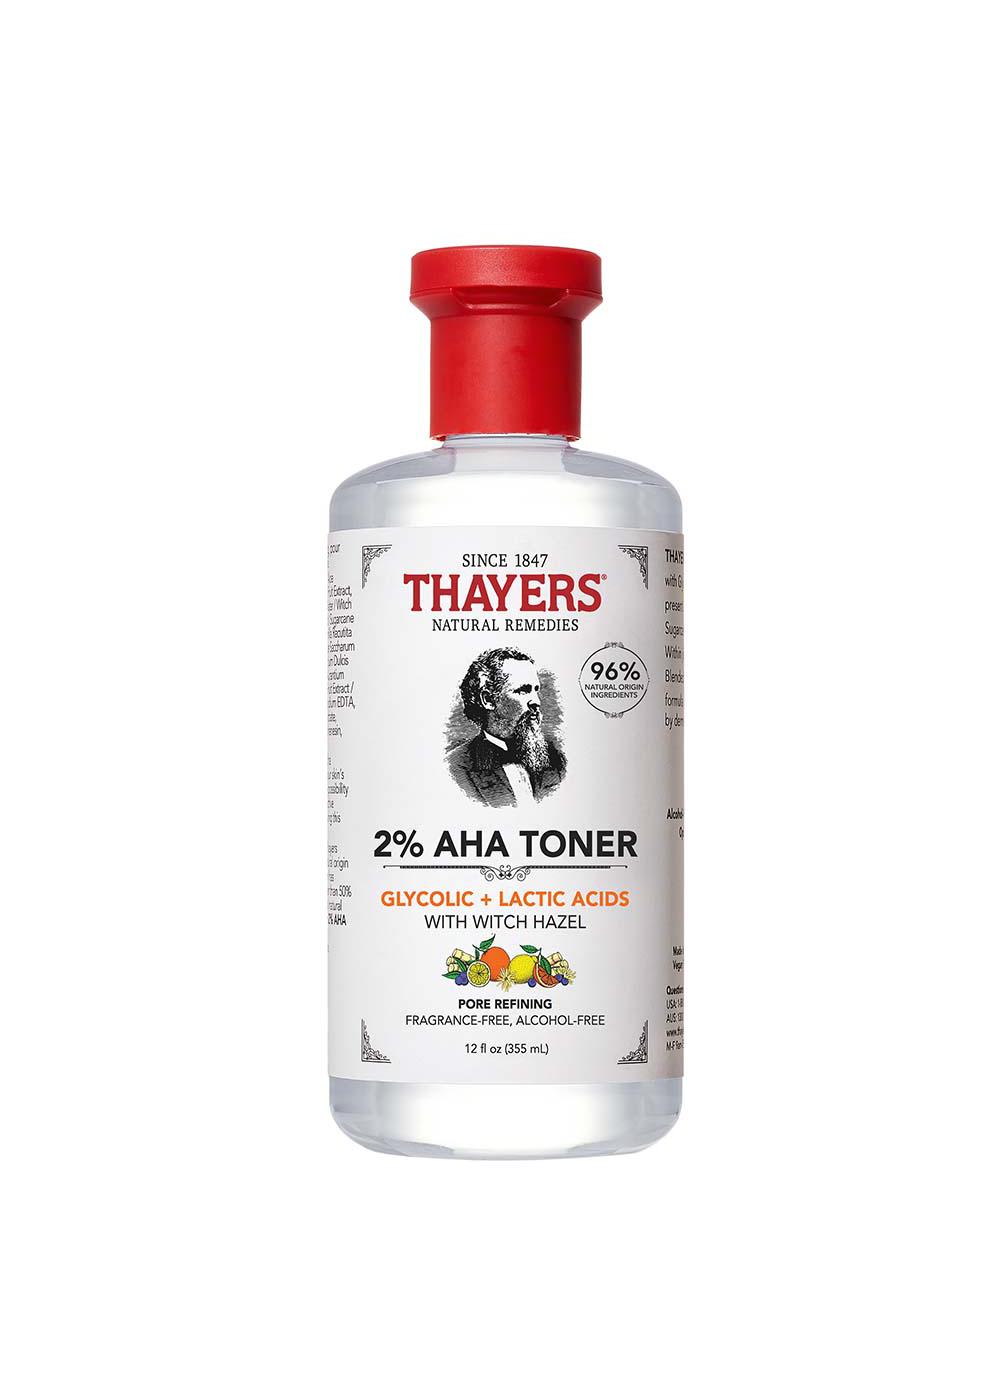 Thayers 2% AHA Toner; image 1 of 2